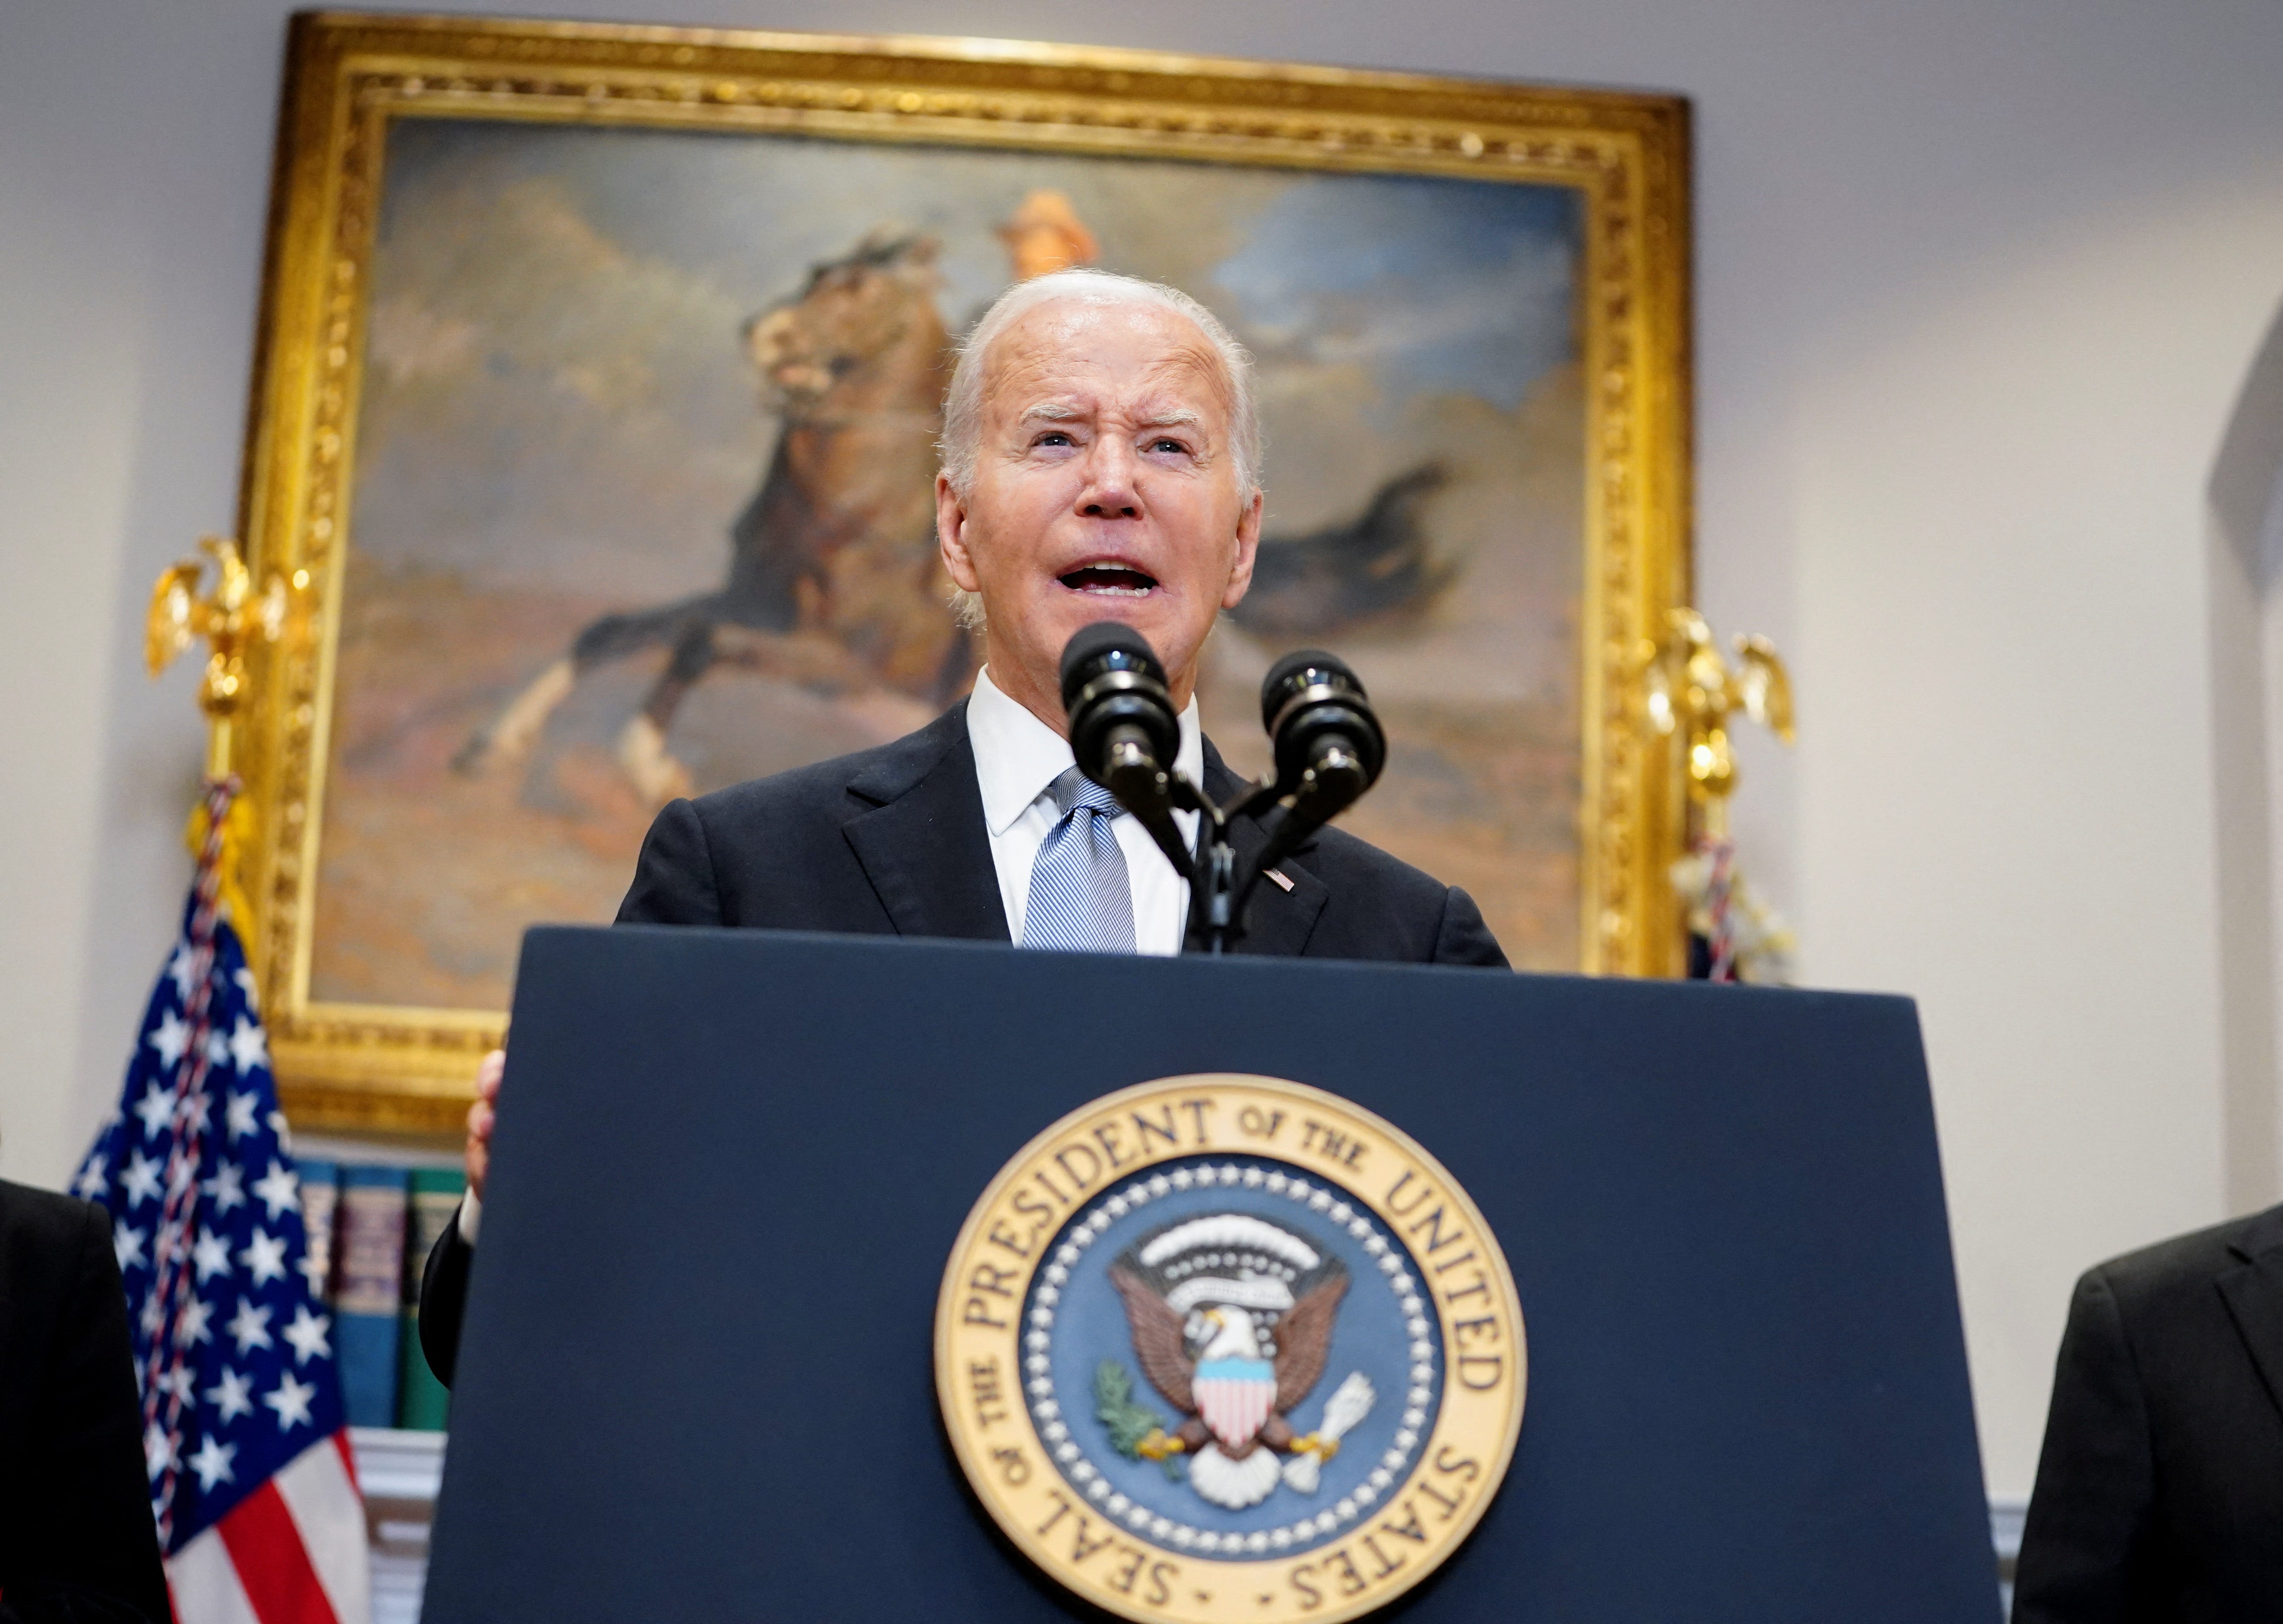 Biden to address the nation Sunday night after Trump assassination attempt: Live updates